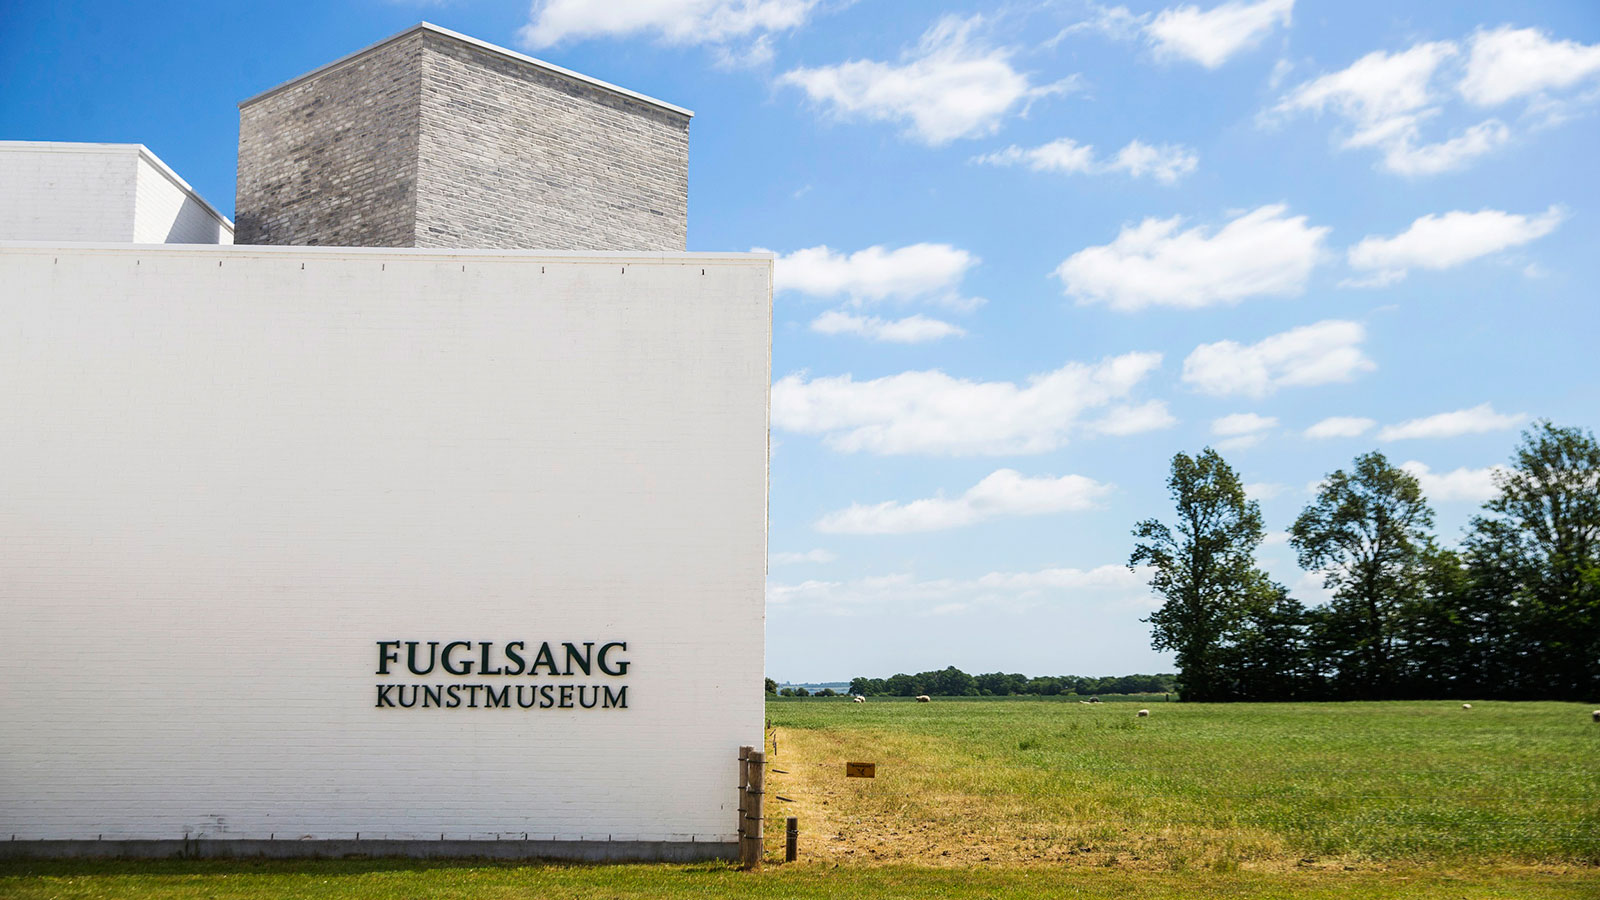 Fuglsang Kunstmuseum - Architektur und Natur 